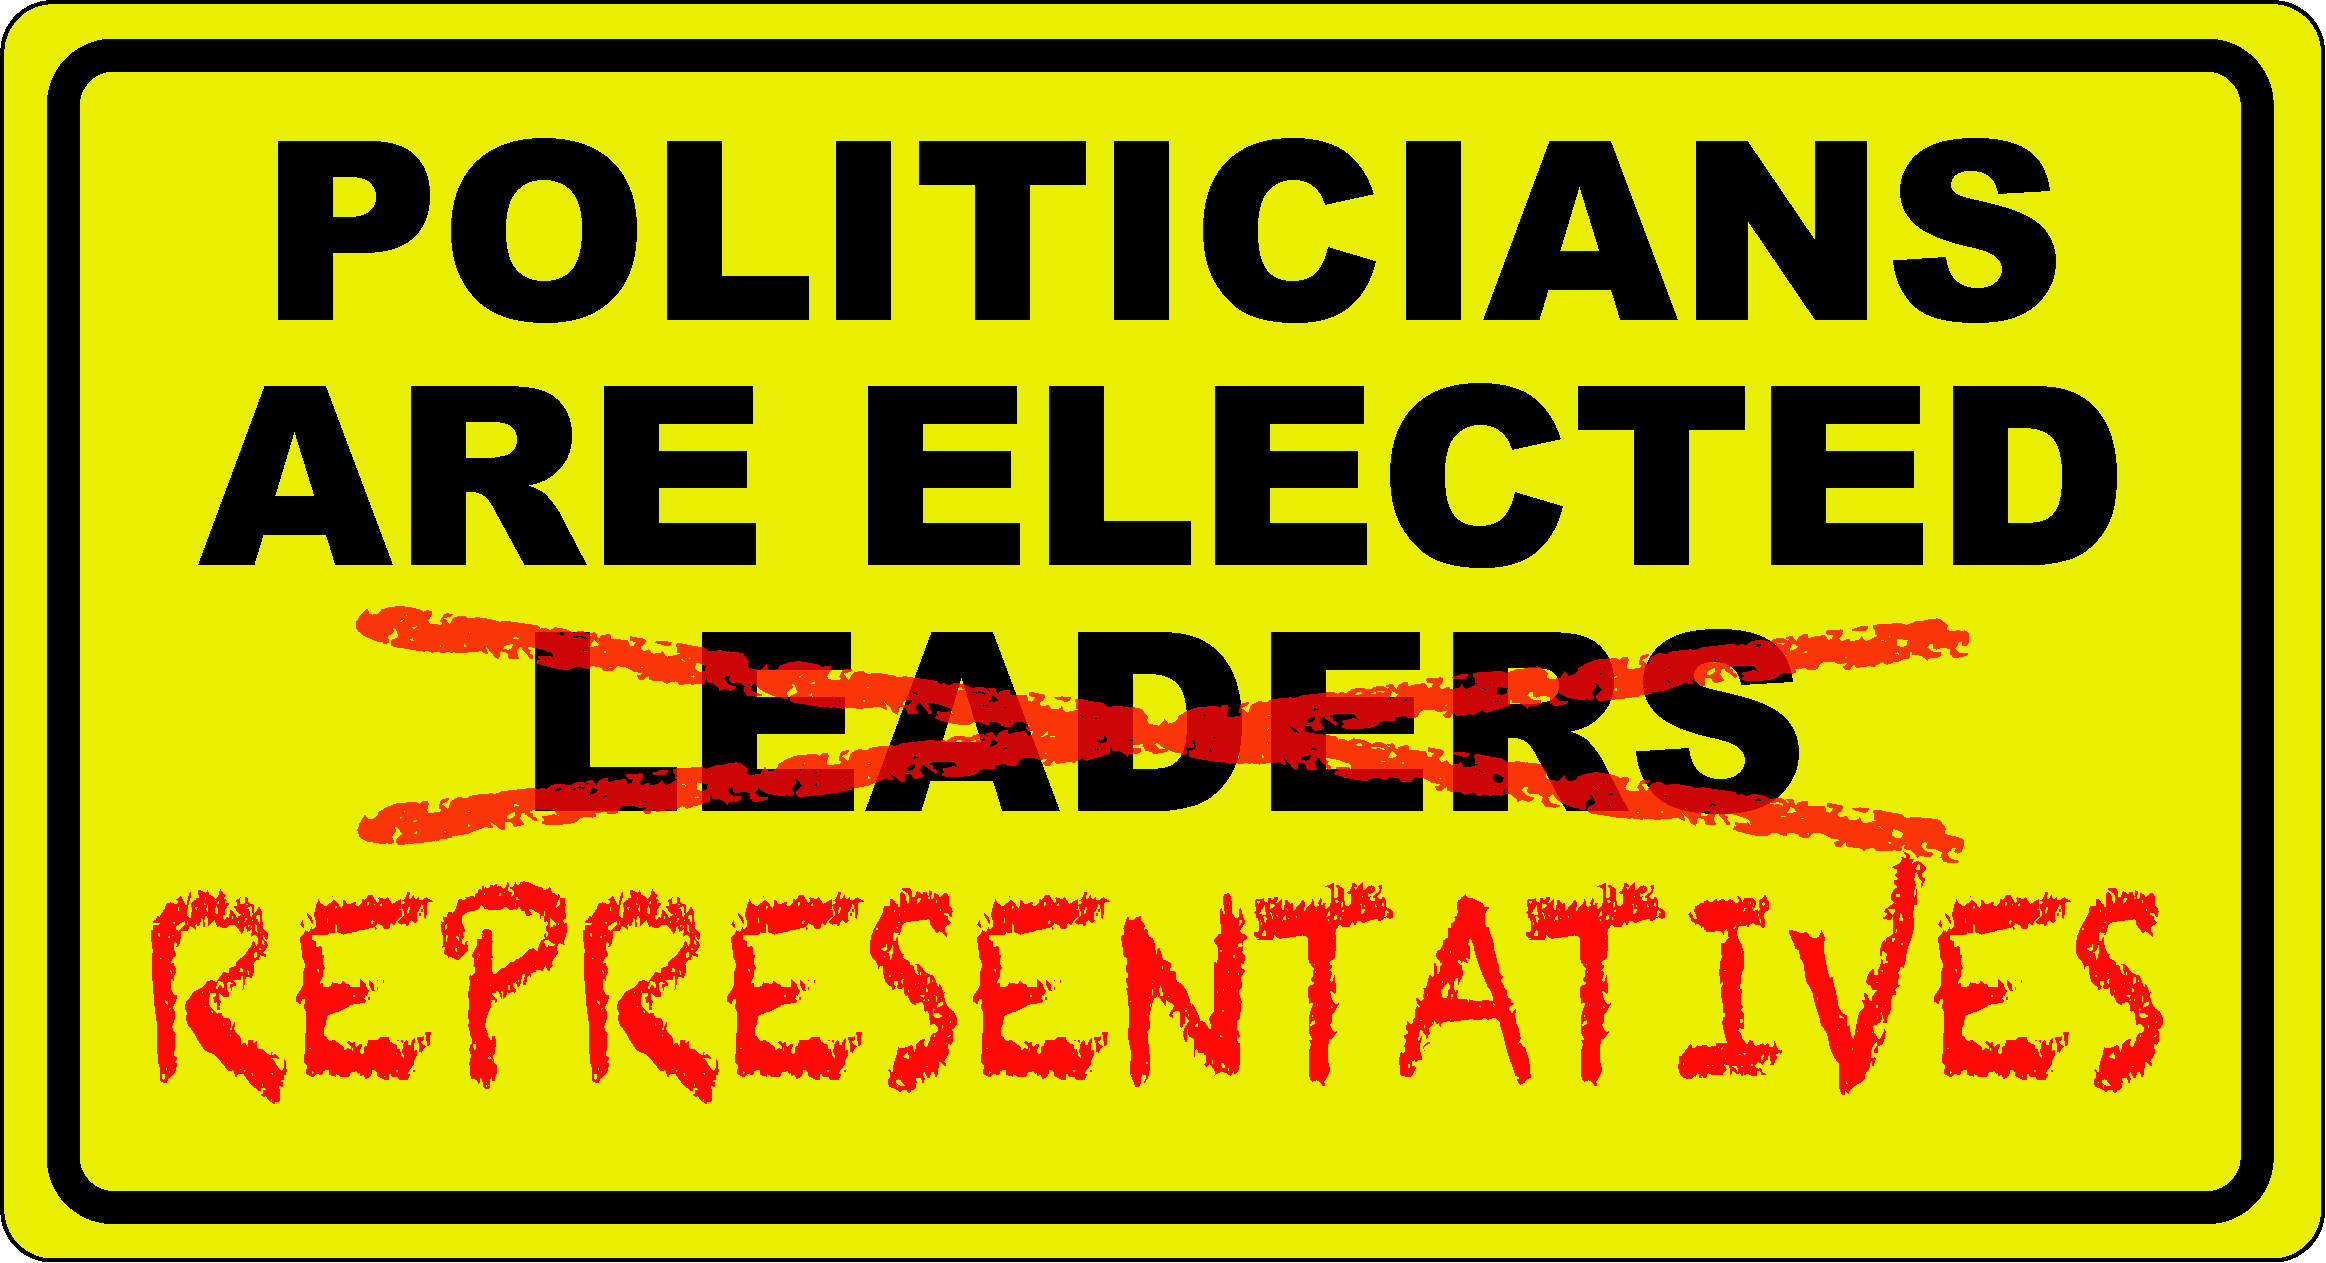 Politicians are elected representatives